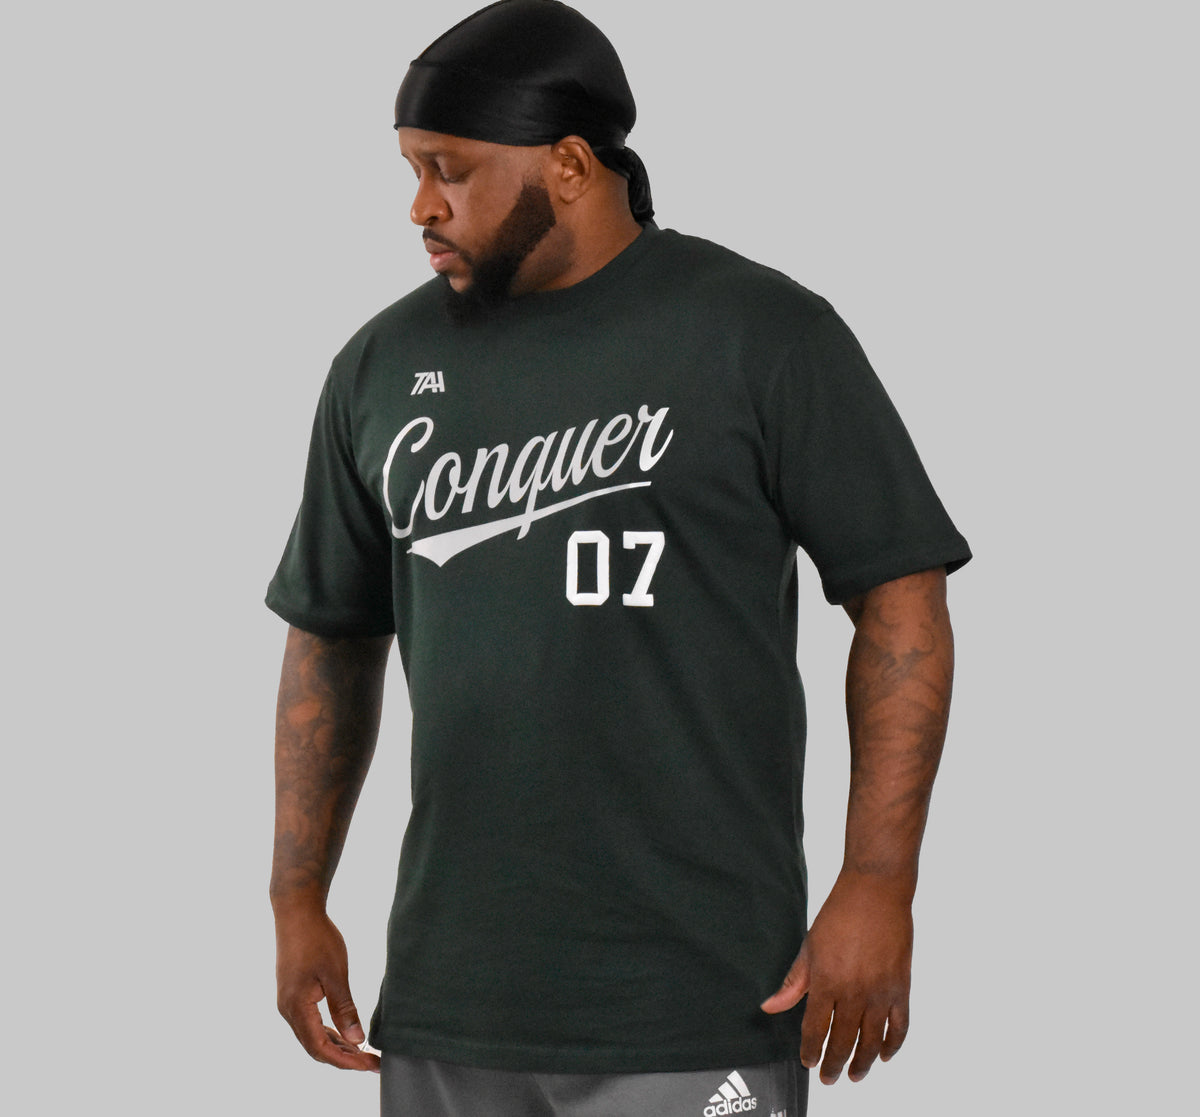 Conquer T-shirt - Dark Green